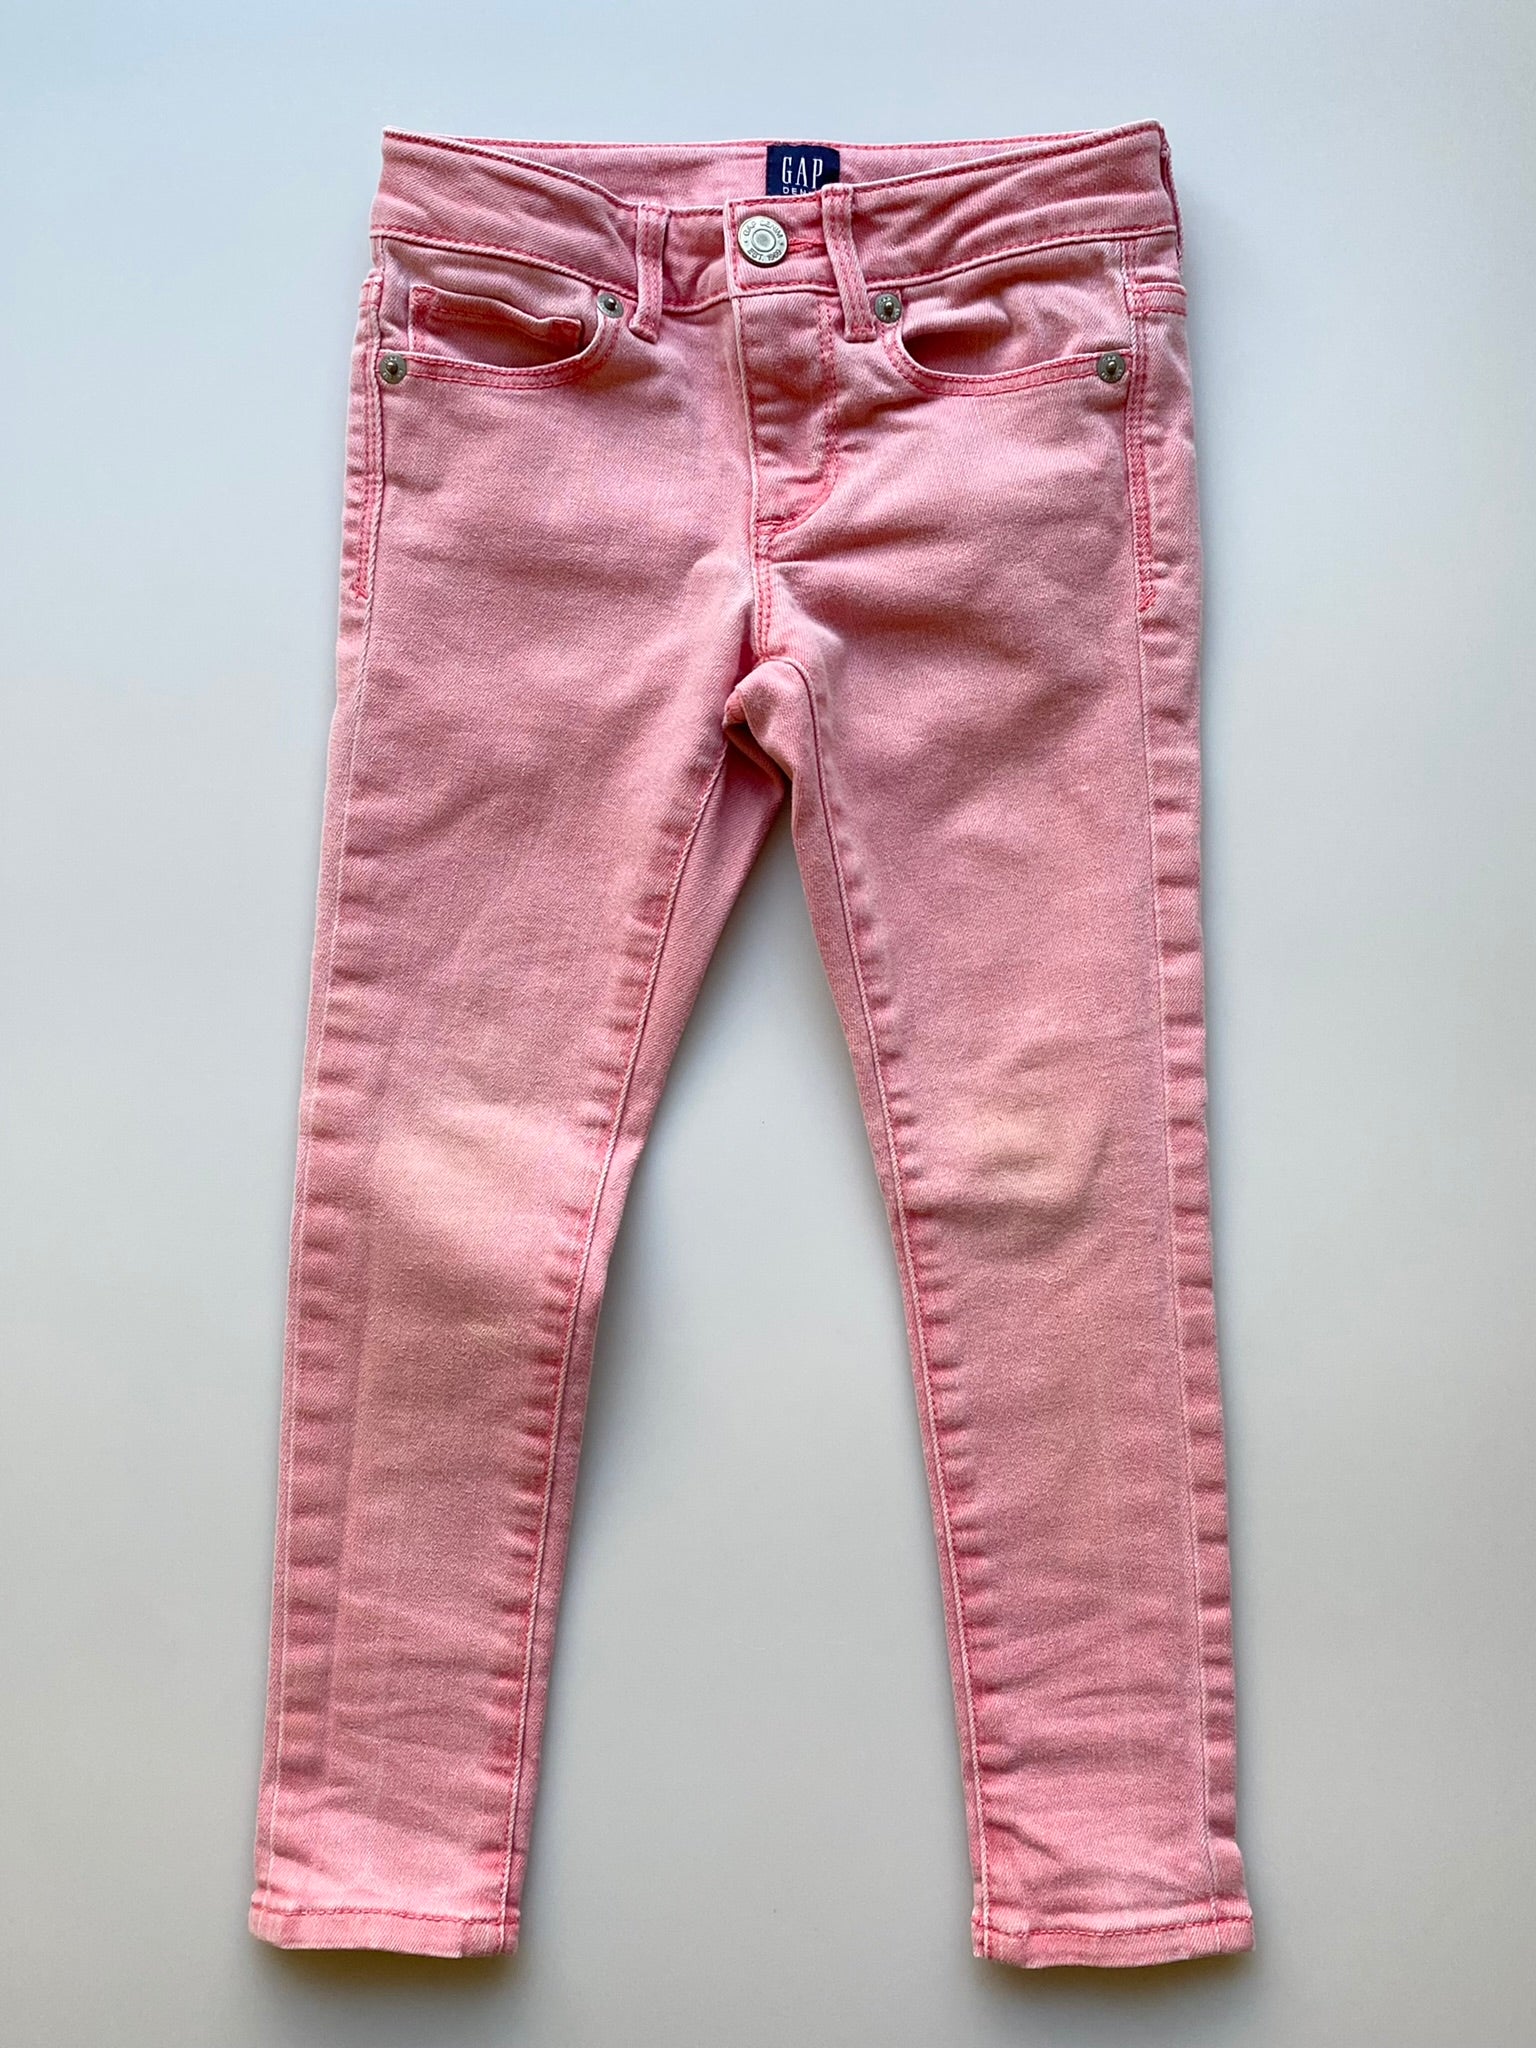 GAP Pink Skinny Jeans Age 5